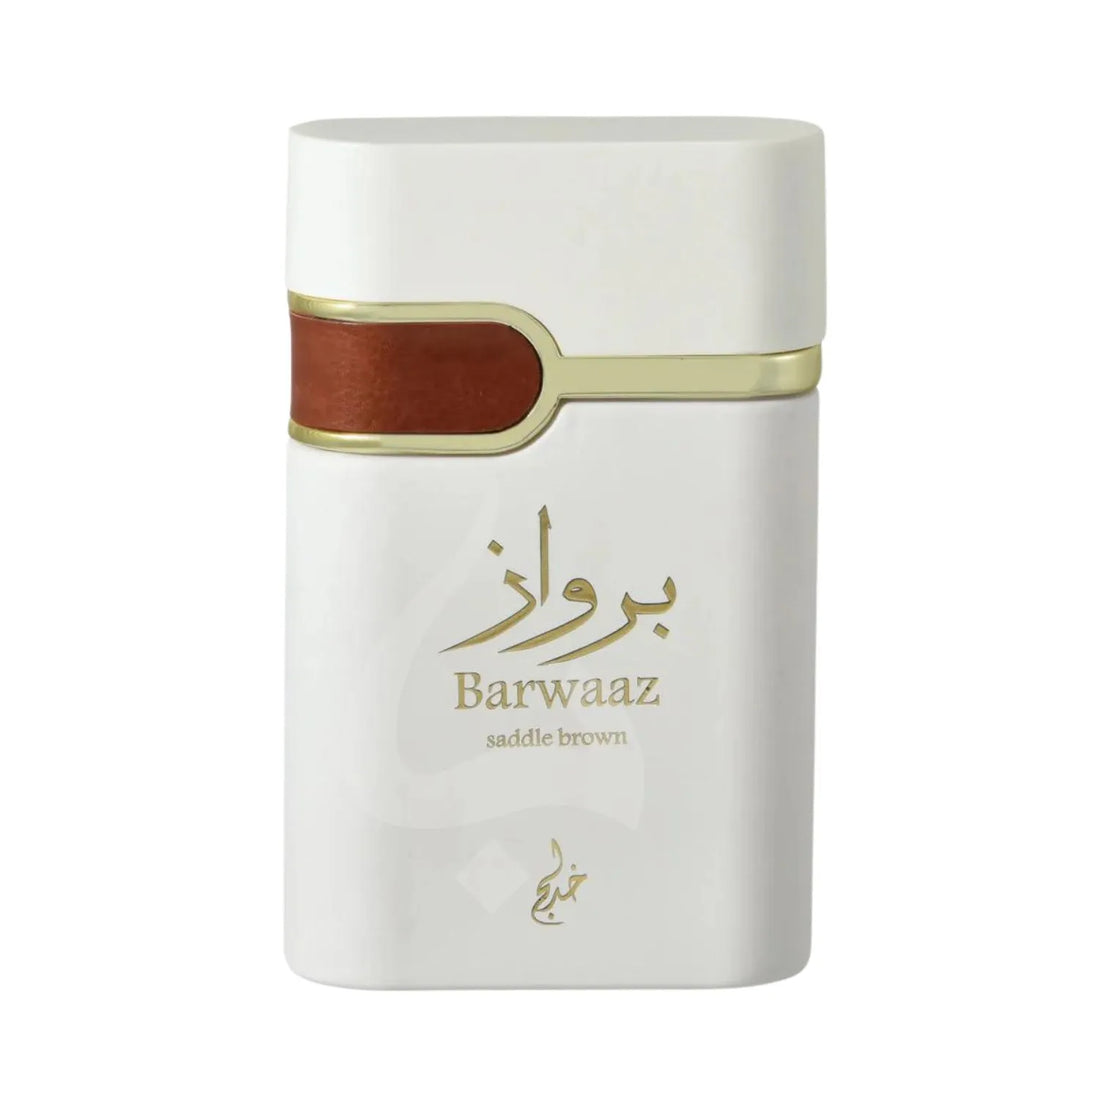 Barwaaz Saddle Brown Perfume Bottle